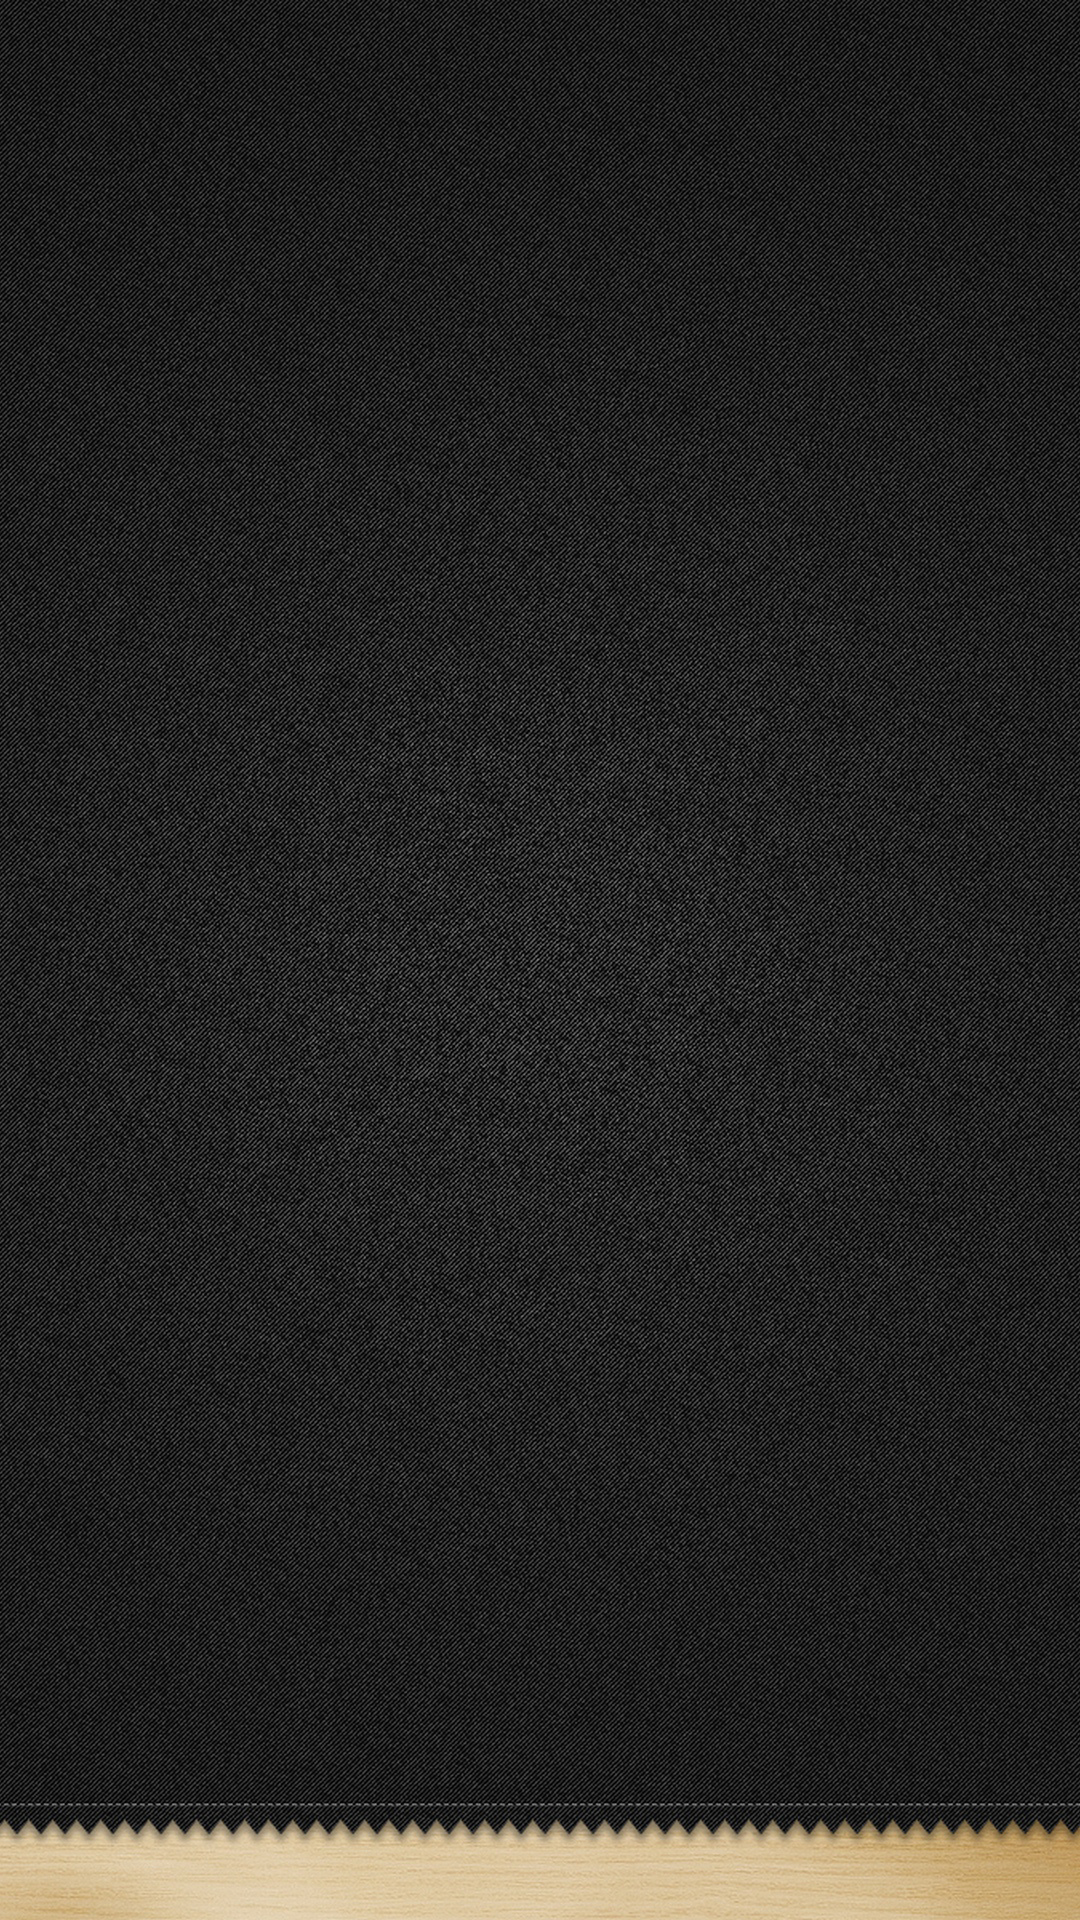 Clean Dark Denim Texture Android Wallpaper